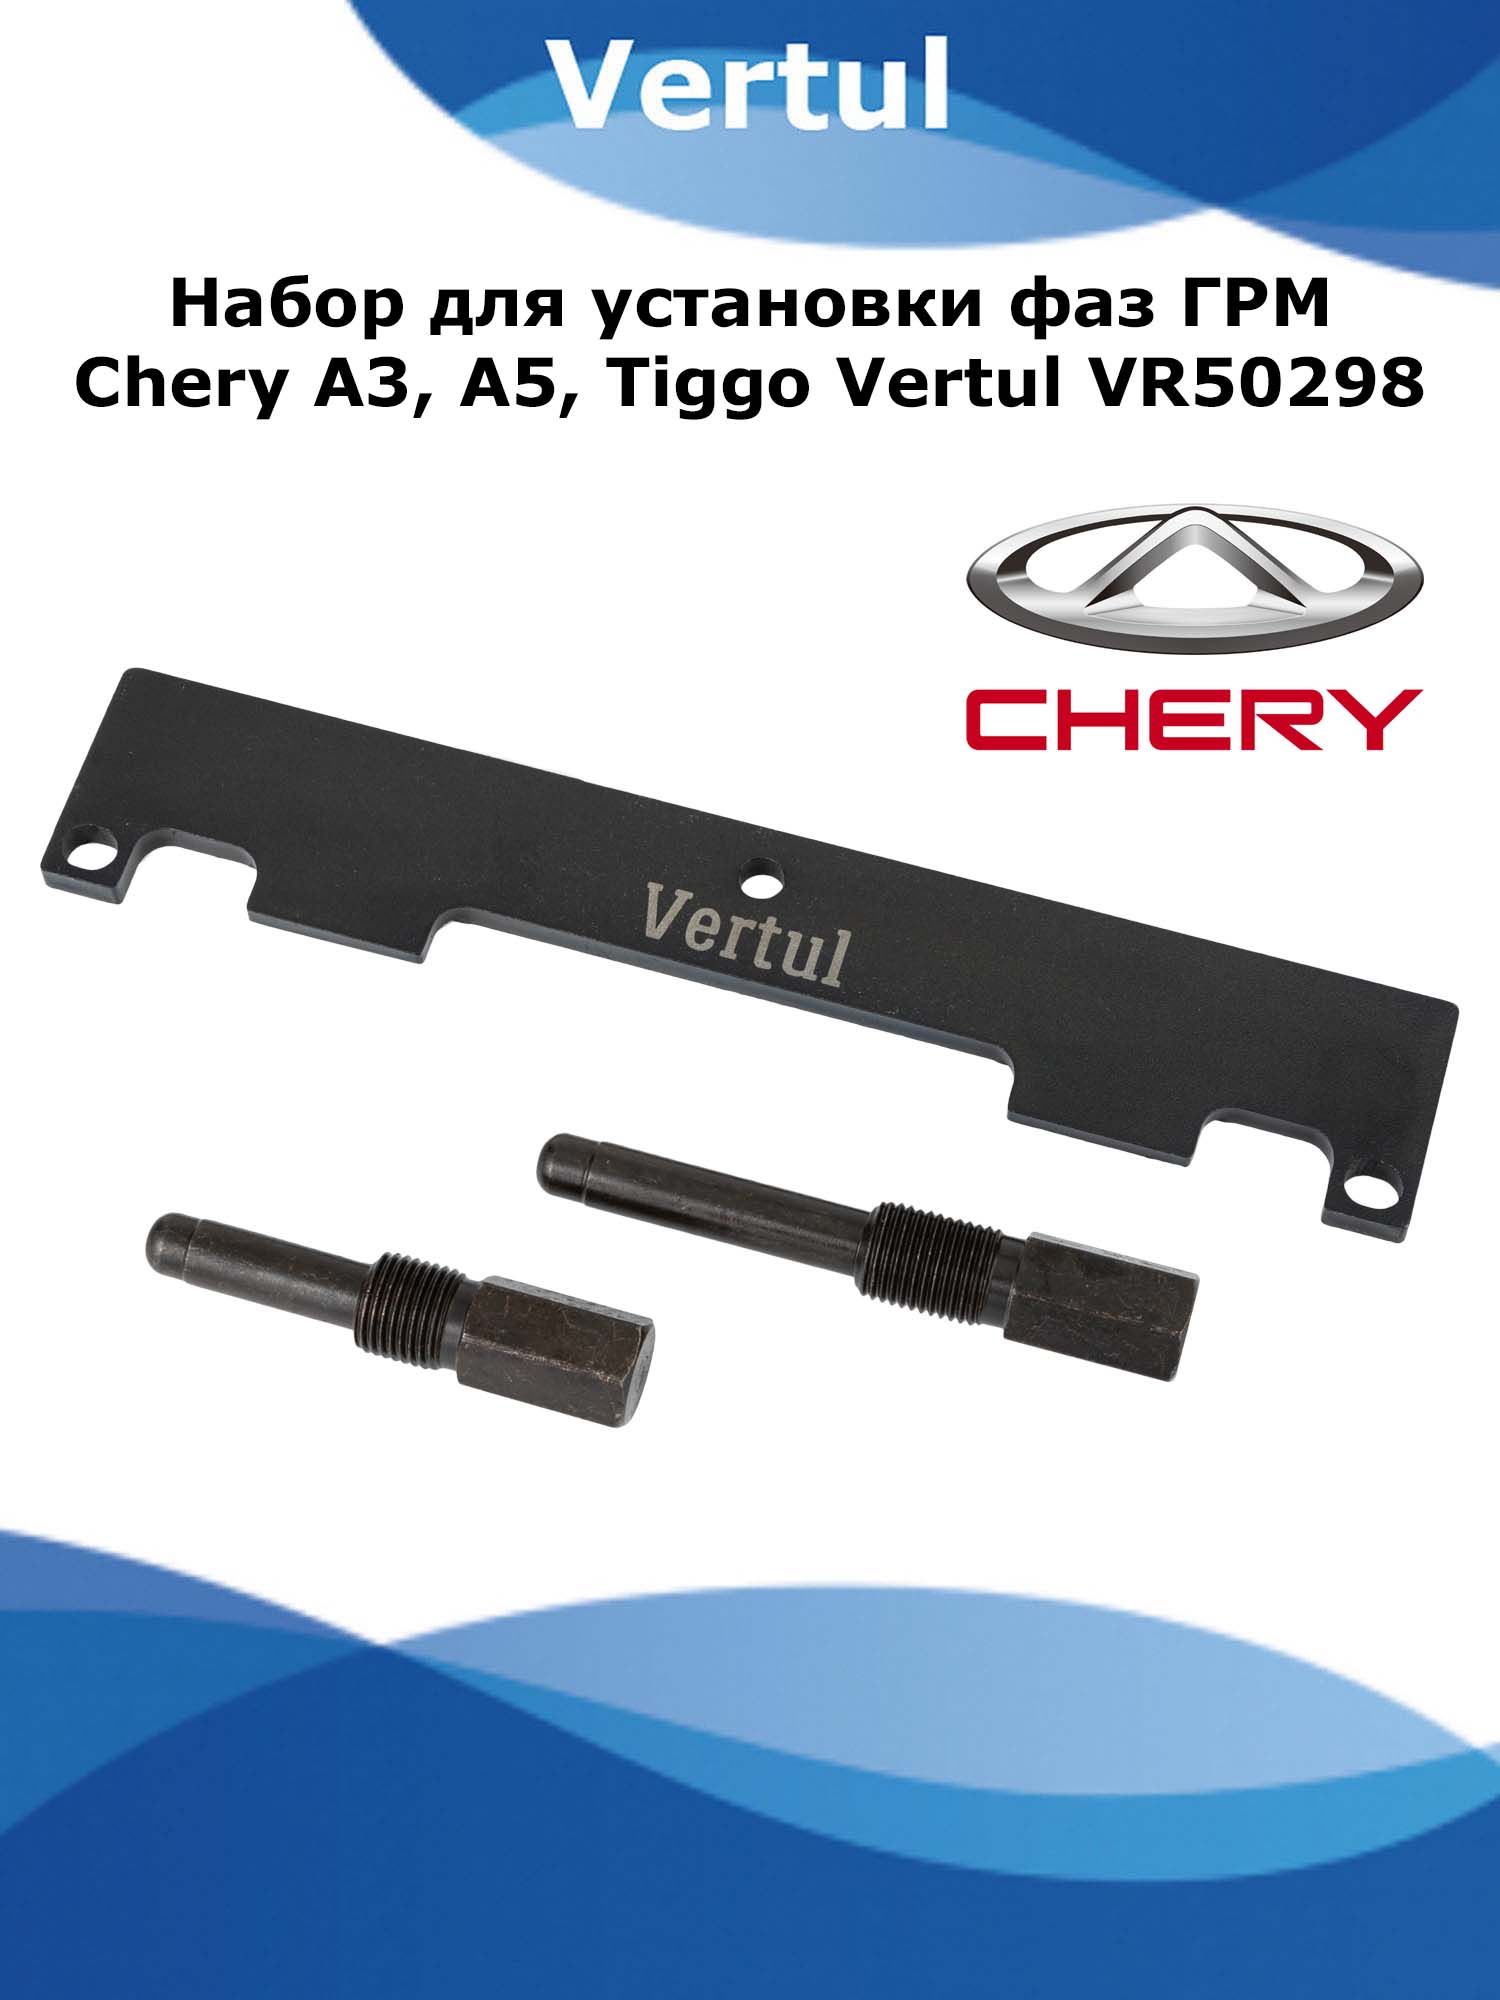 Набор для установки фаз ГРМ Chery A3, A5, Tiggo Vertul VR50298